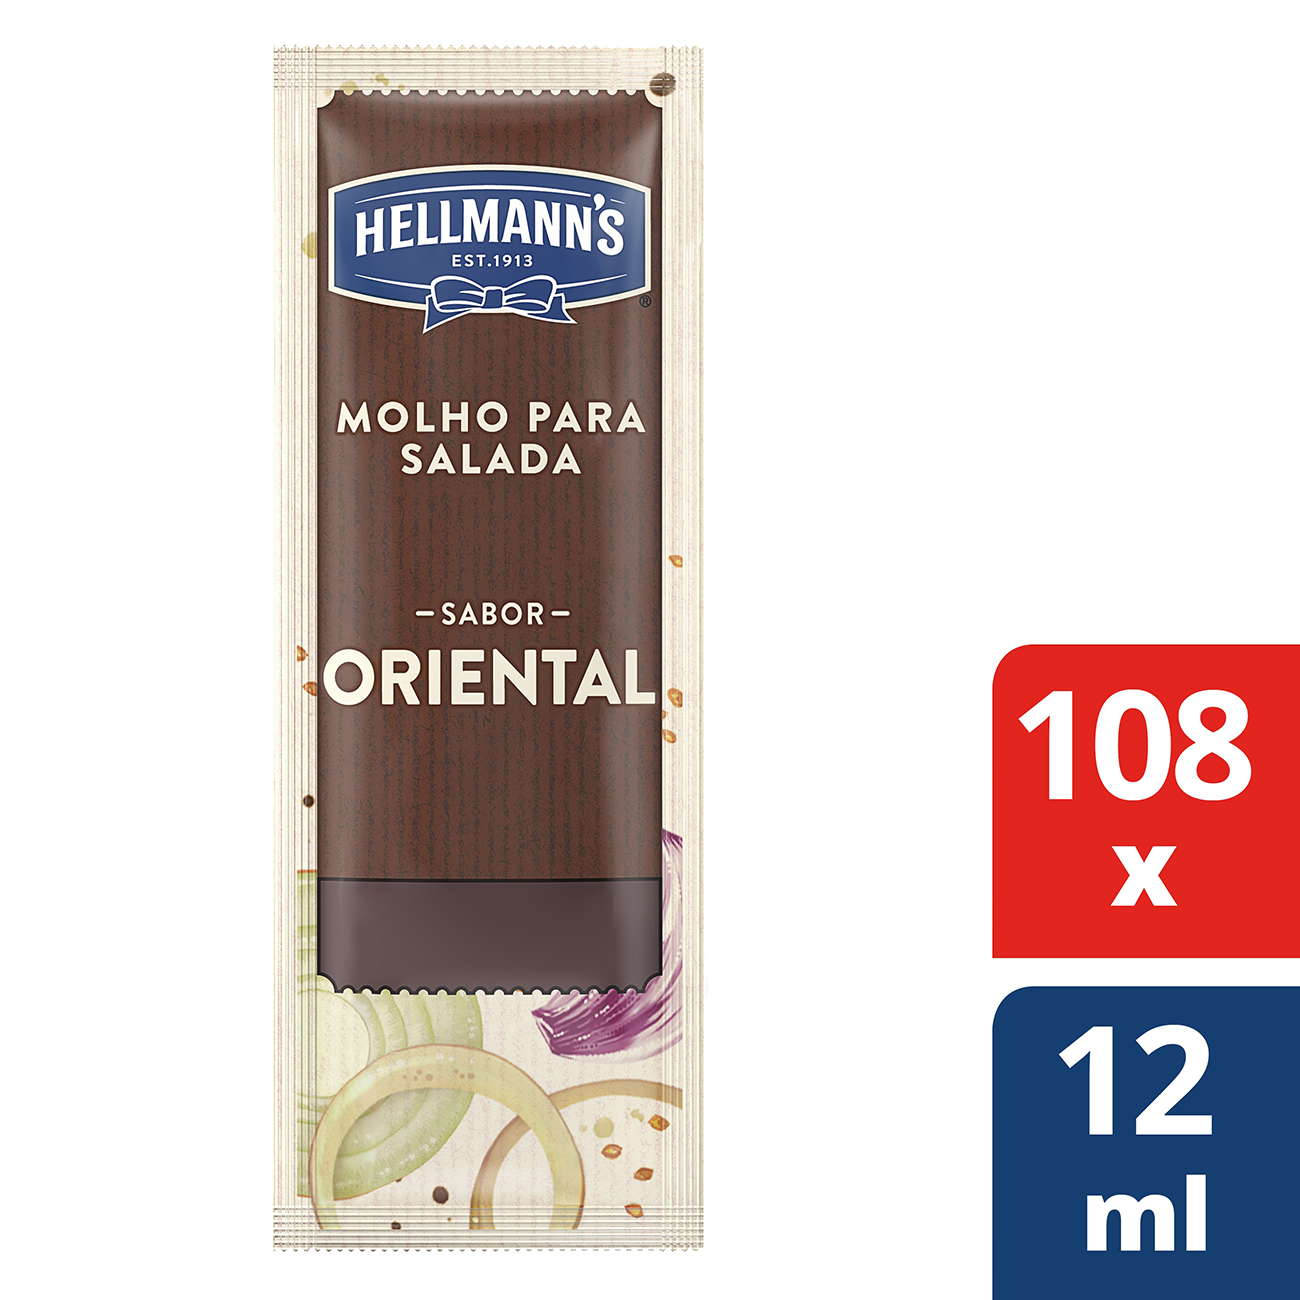 Molho Para Salada Hellmann's Oriental 12ml | Com 108 sach�s